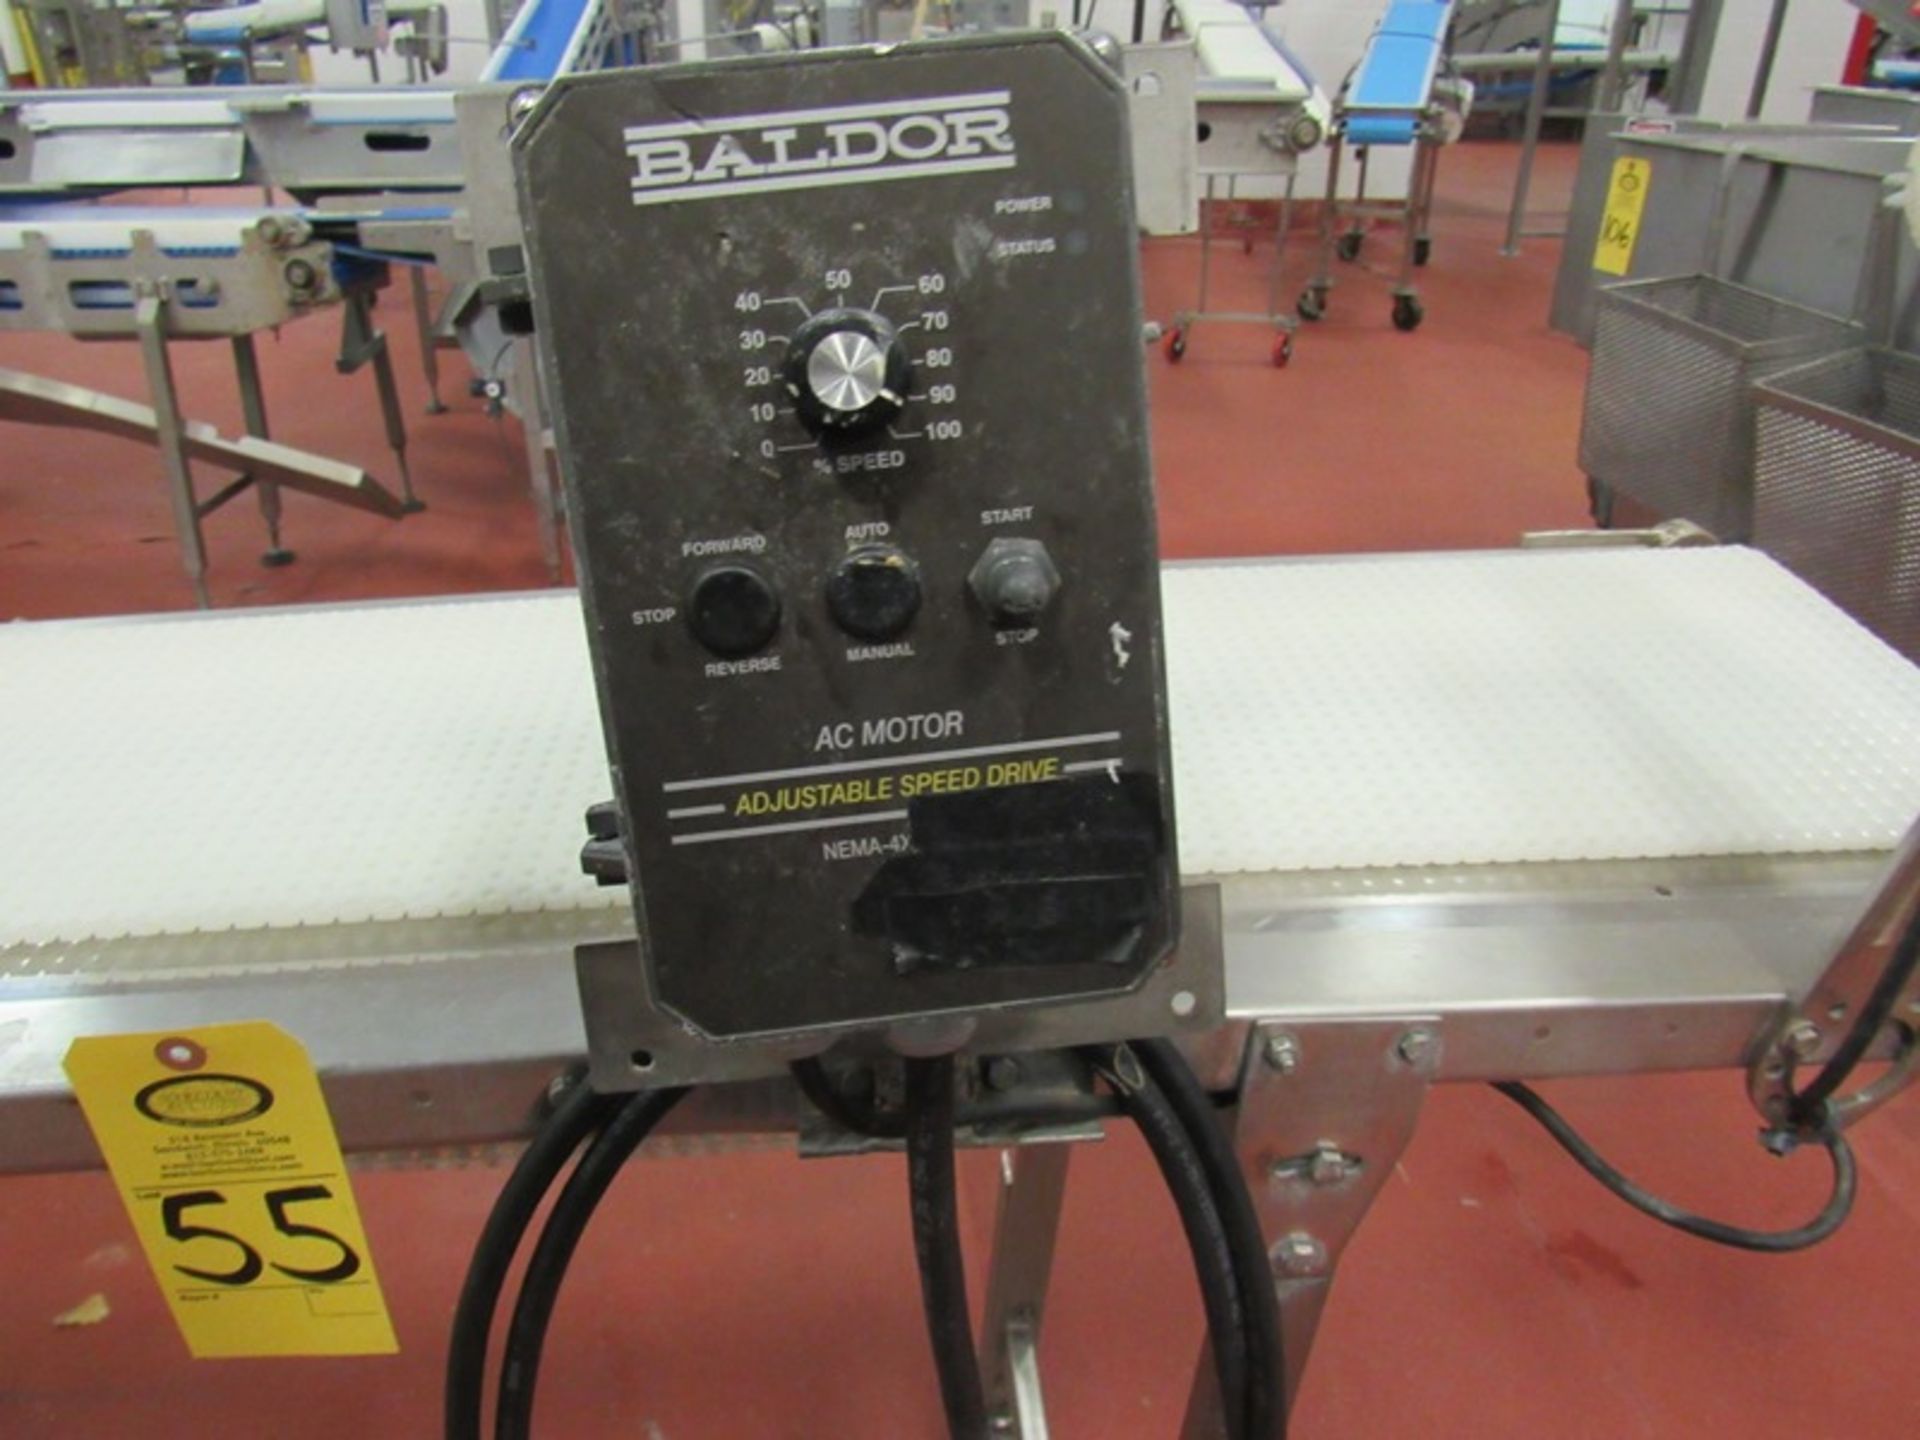 Stainless Steel Conveyor, 12" W X 90" L plastic belt, Baldor AC Motor, 110 VAC (Required Loading Fee - Image 3 of 3